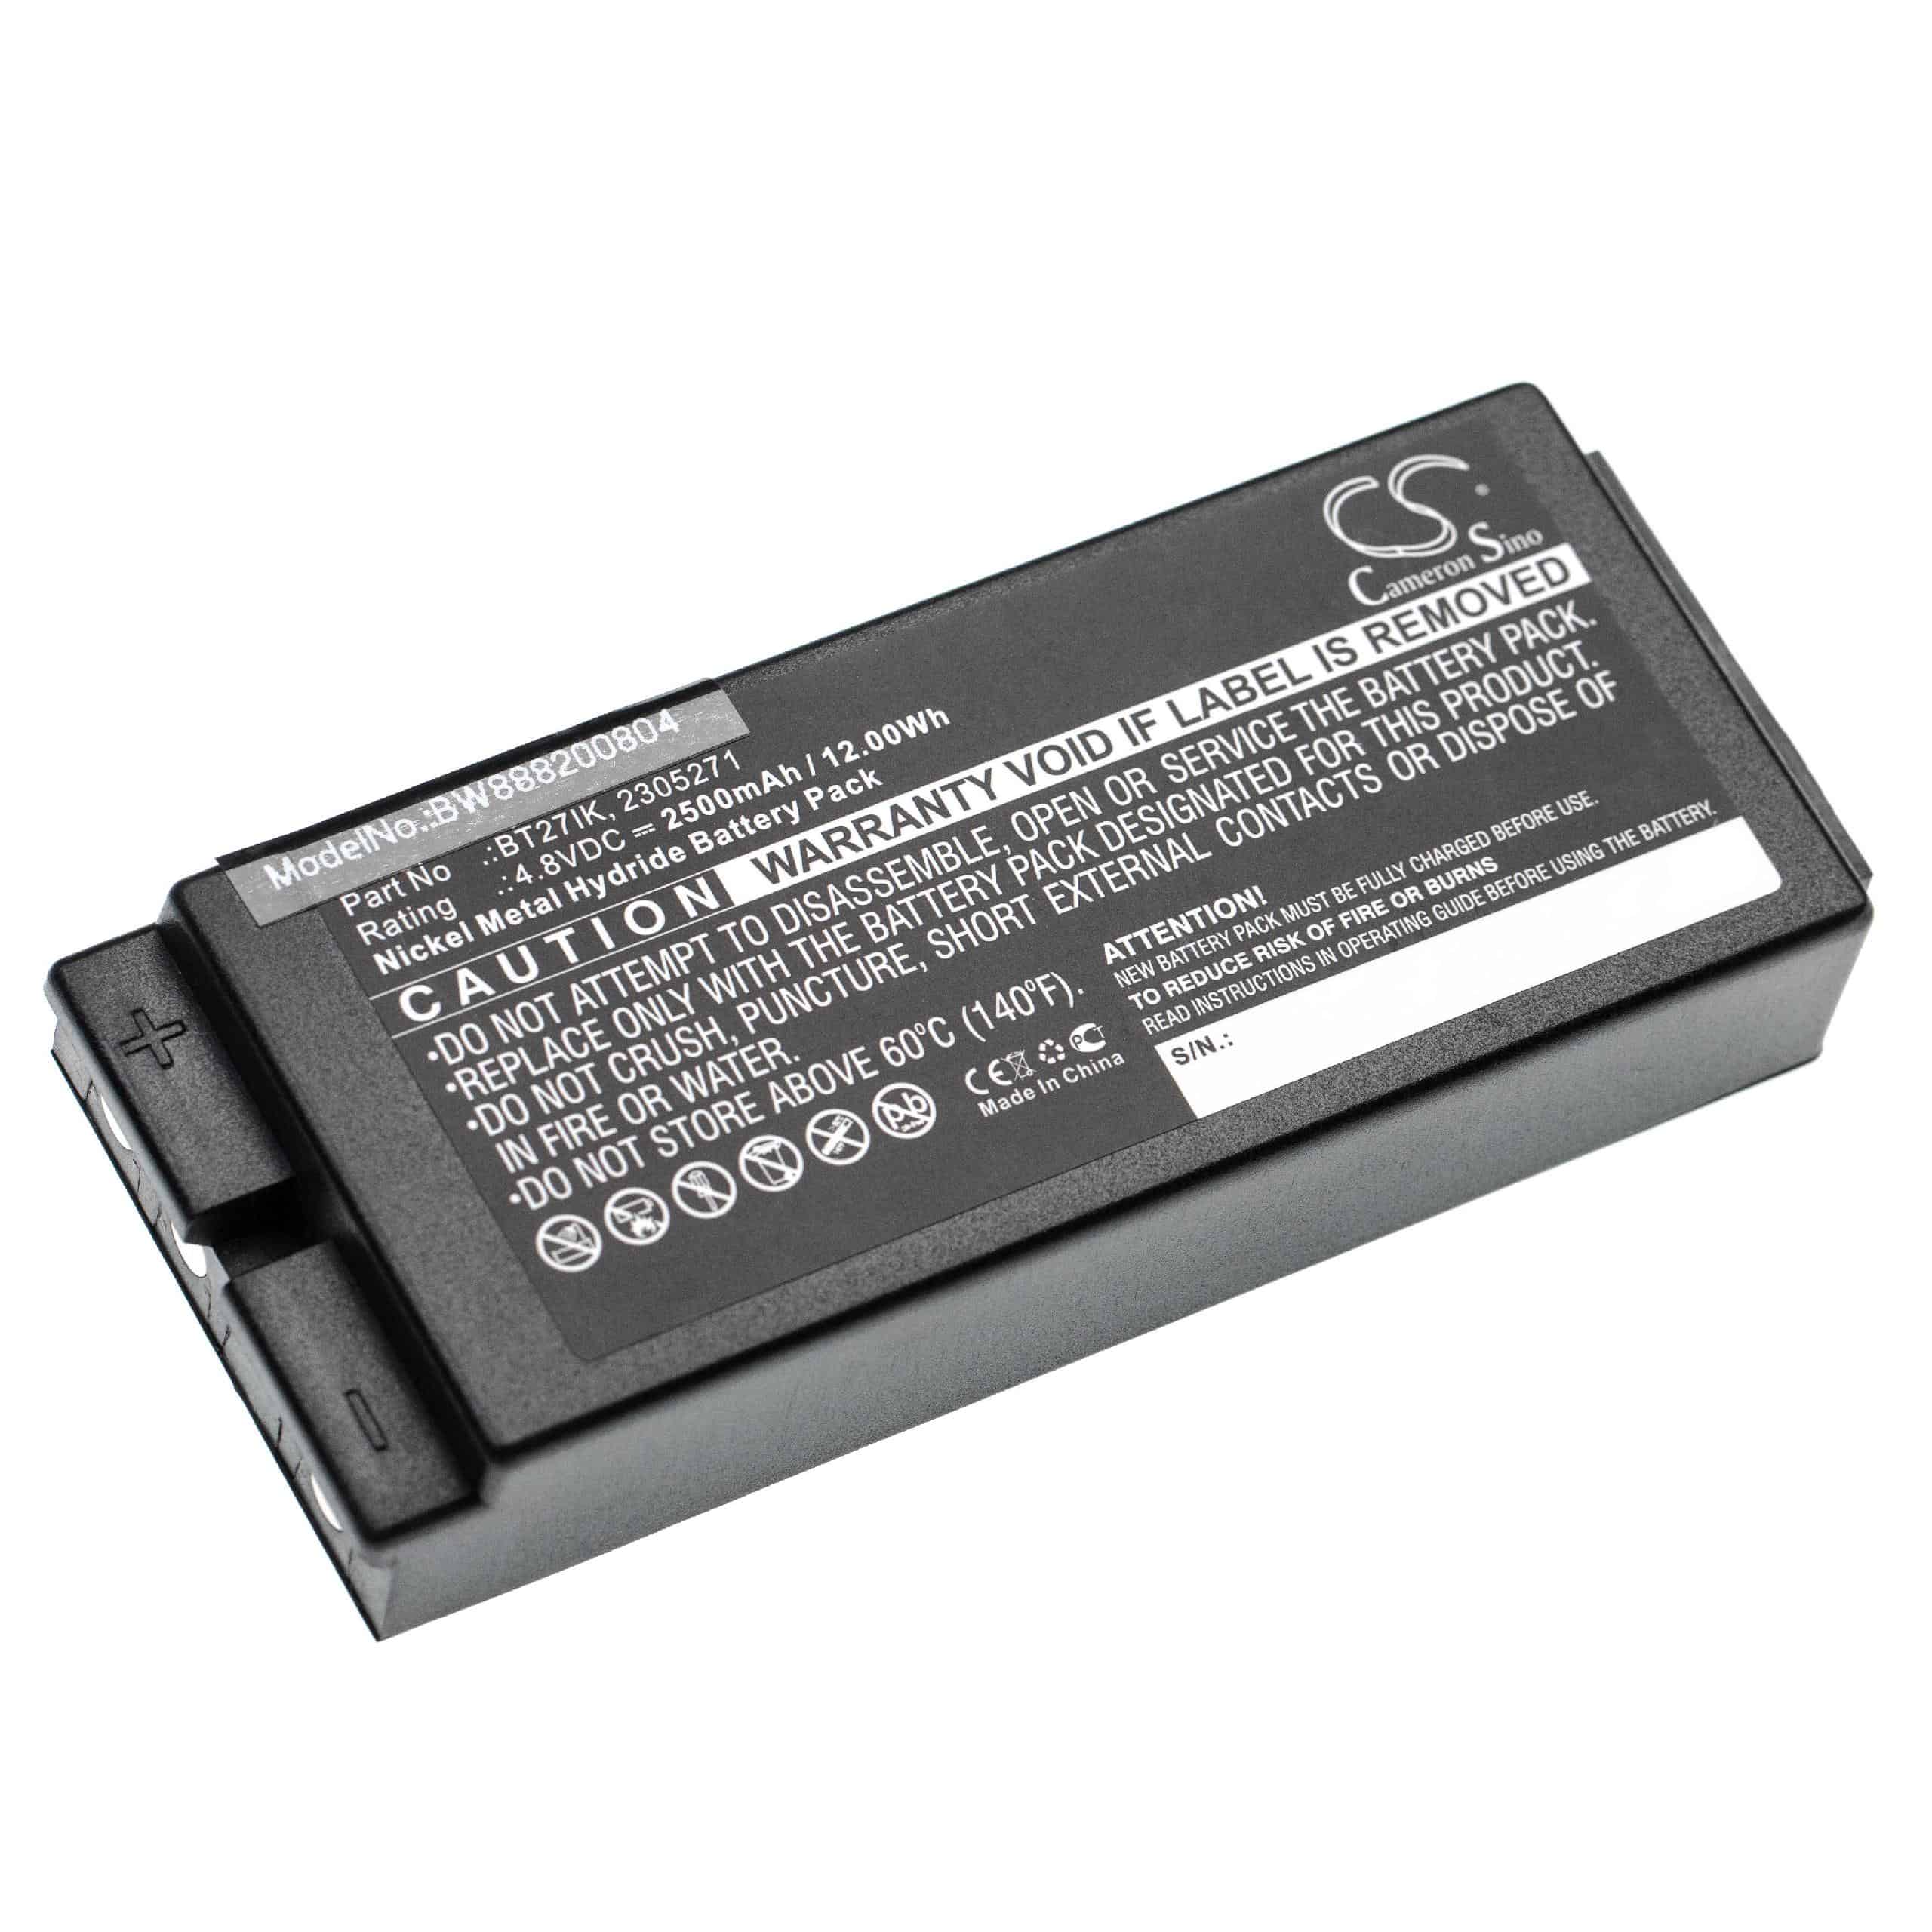 Batteria per radiocomando industriale sostituisce Danfoss 2305271, BT24IK Ikusi - 2500mAh 4,8V NiMH